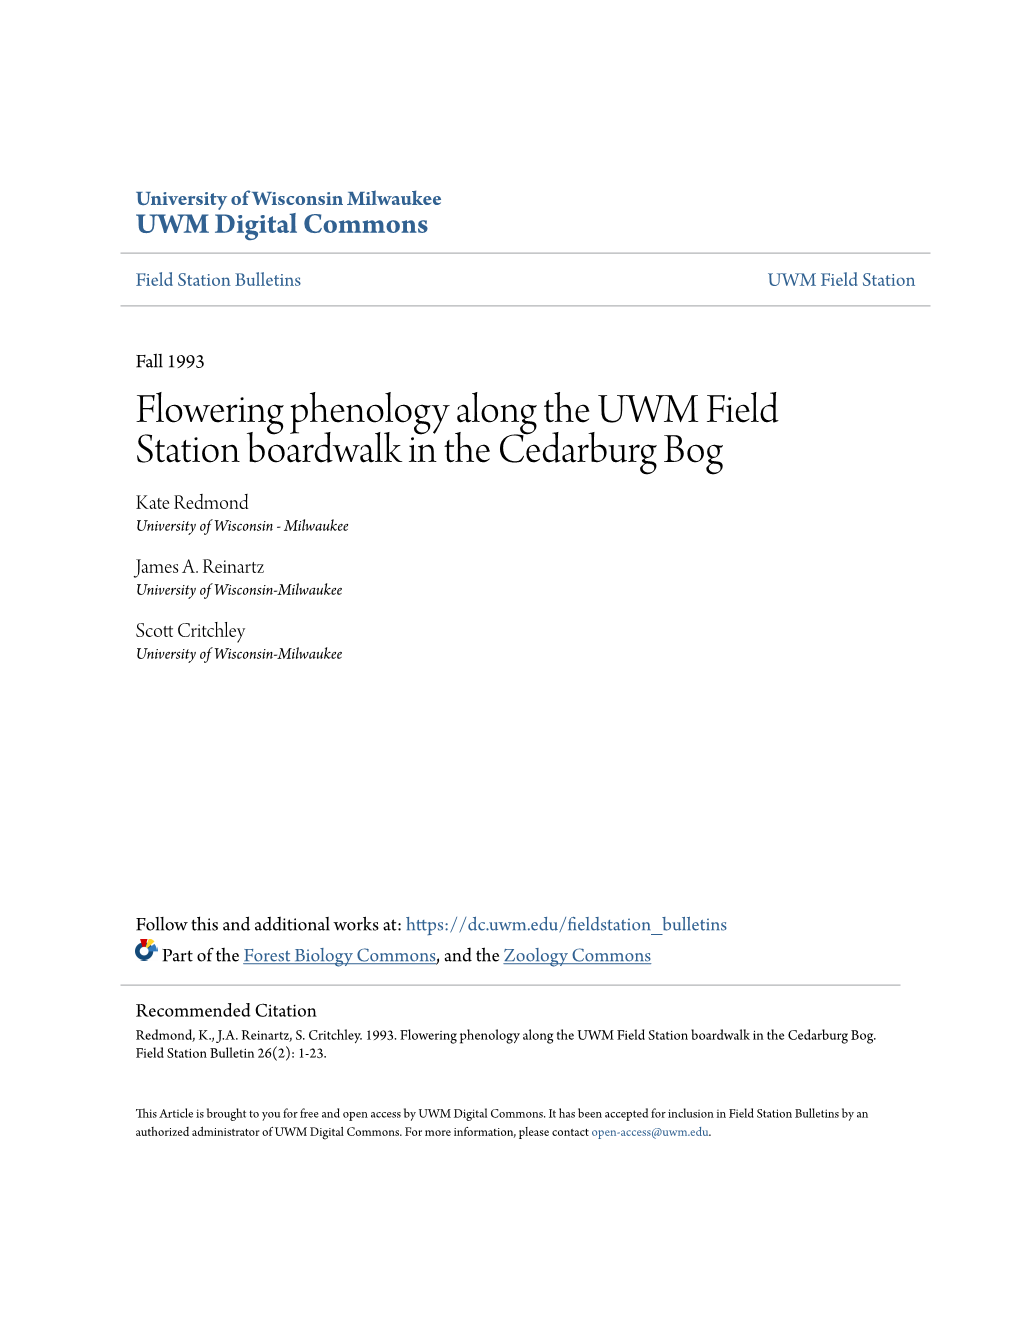 Flowering Phenology Along the UWM Field Station Boardwalk in the Cedarburg Bog Kate Redmond University of Wisconsin - Milwaukee